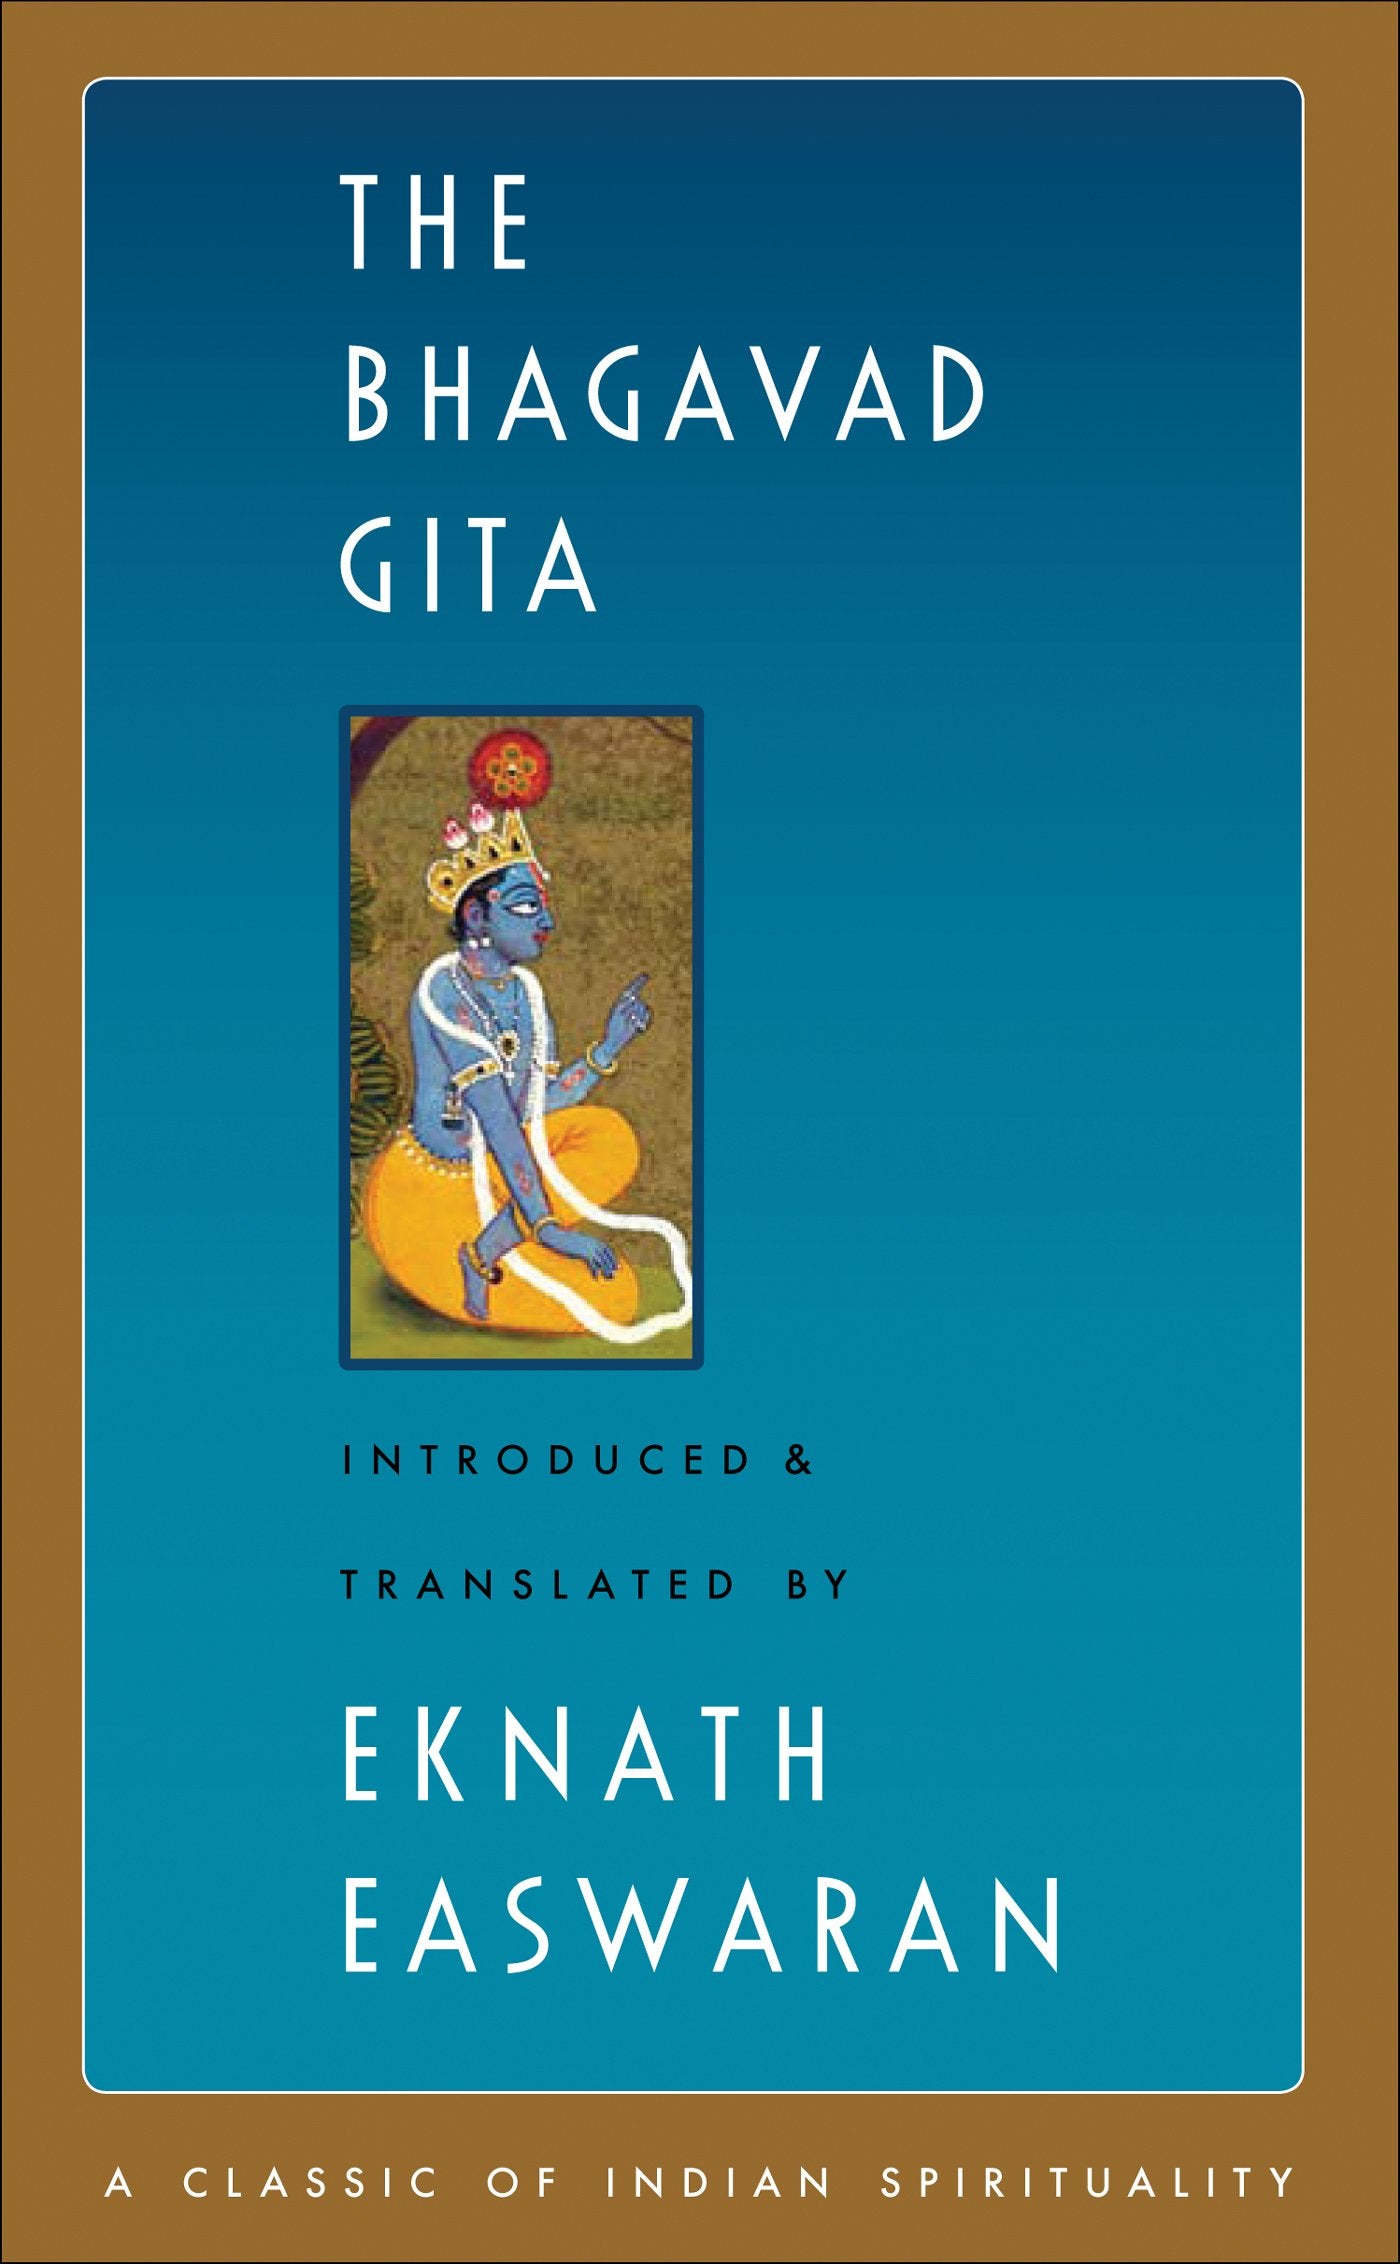 The Bhagavad Gita Translated by Eknath Easwaran